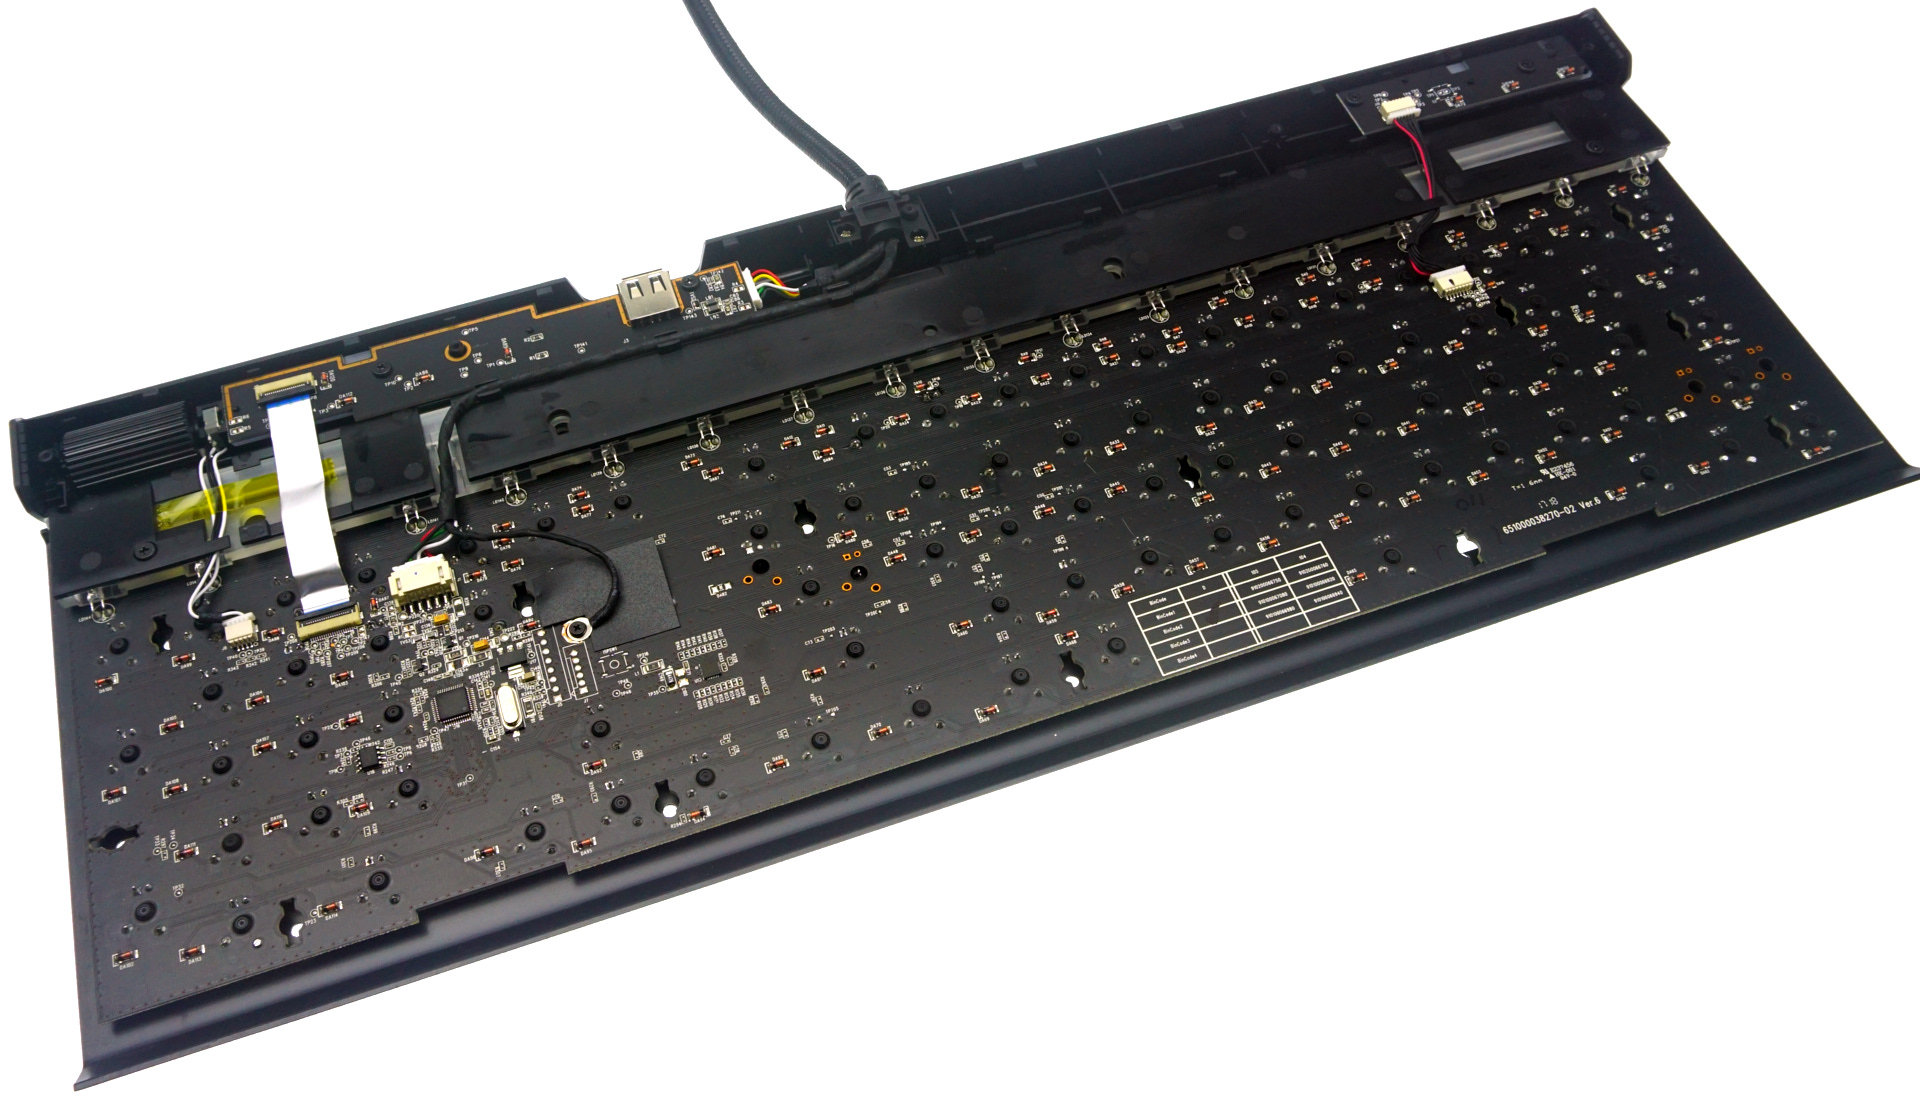 ånd kone Observatory The Keyboard - The Kingston HyperX Alloy Elite Mechanical Keyboard Review